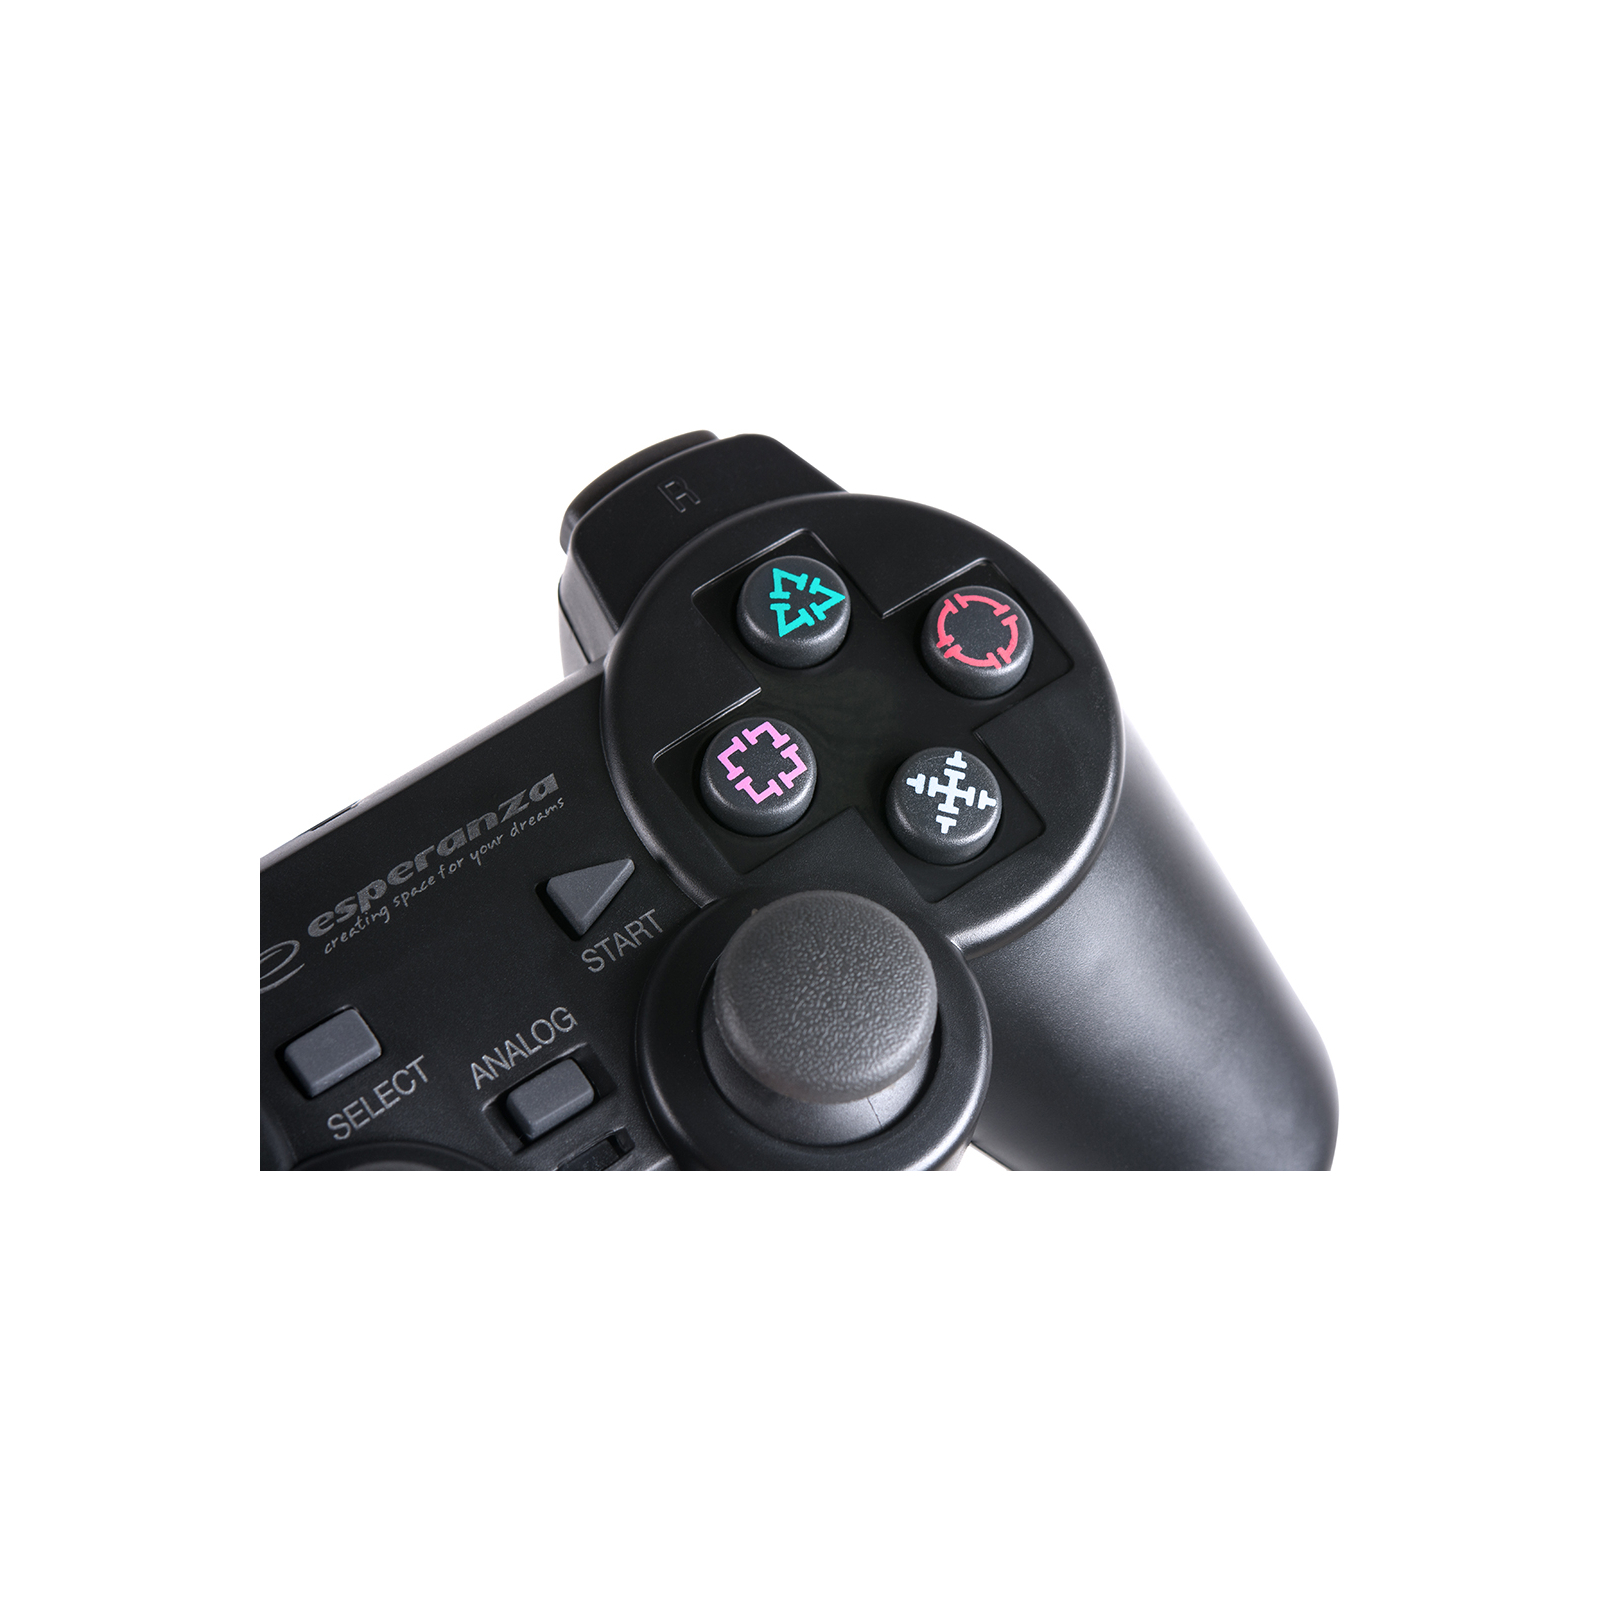 Геймпад Esperanza Vibration gamepad PS2/PS3/PC USB (EG106) изображение 5